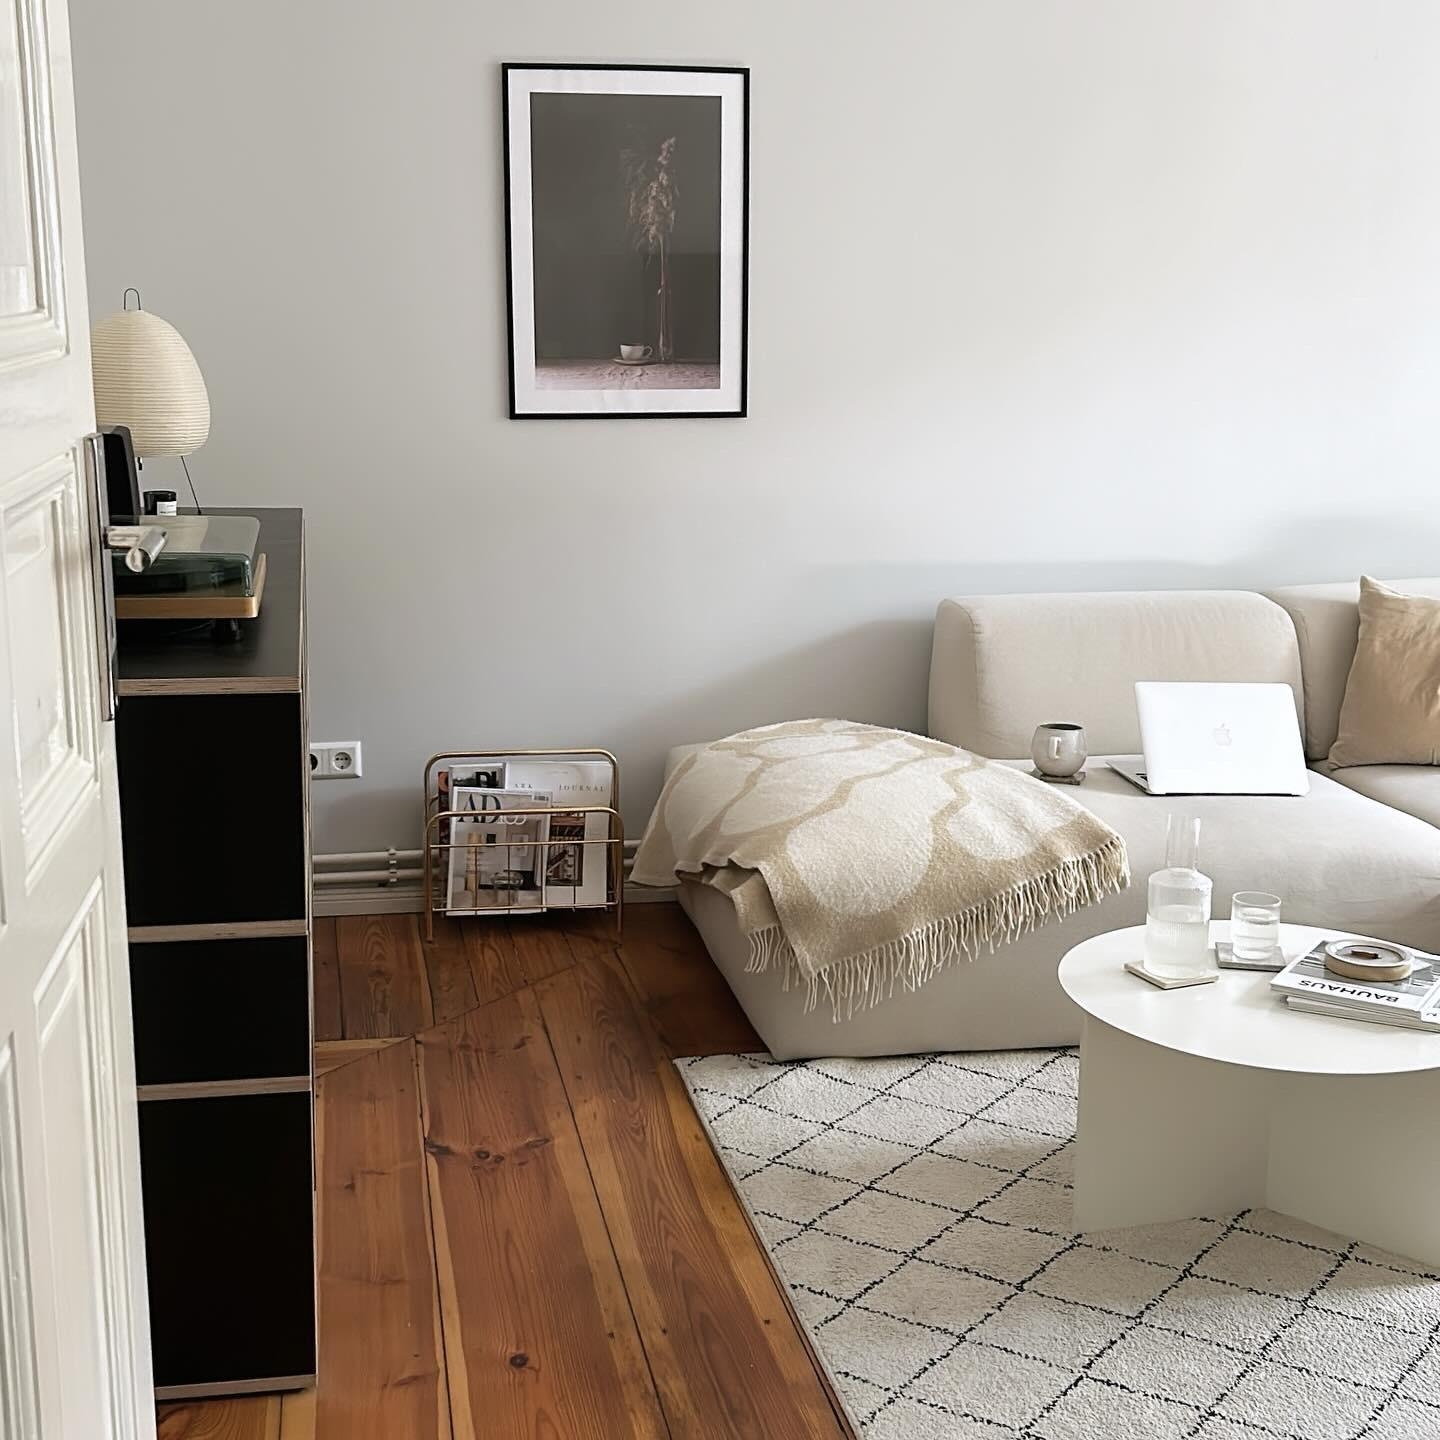 glimpse into the living room
#minimal #livingroom #simple #altbauliebe #neutral